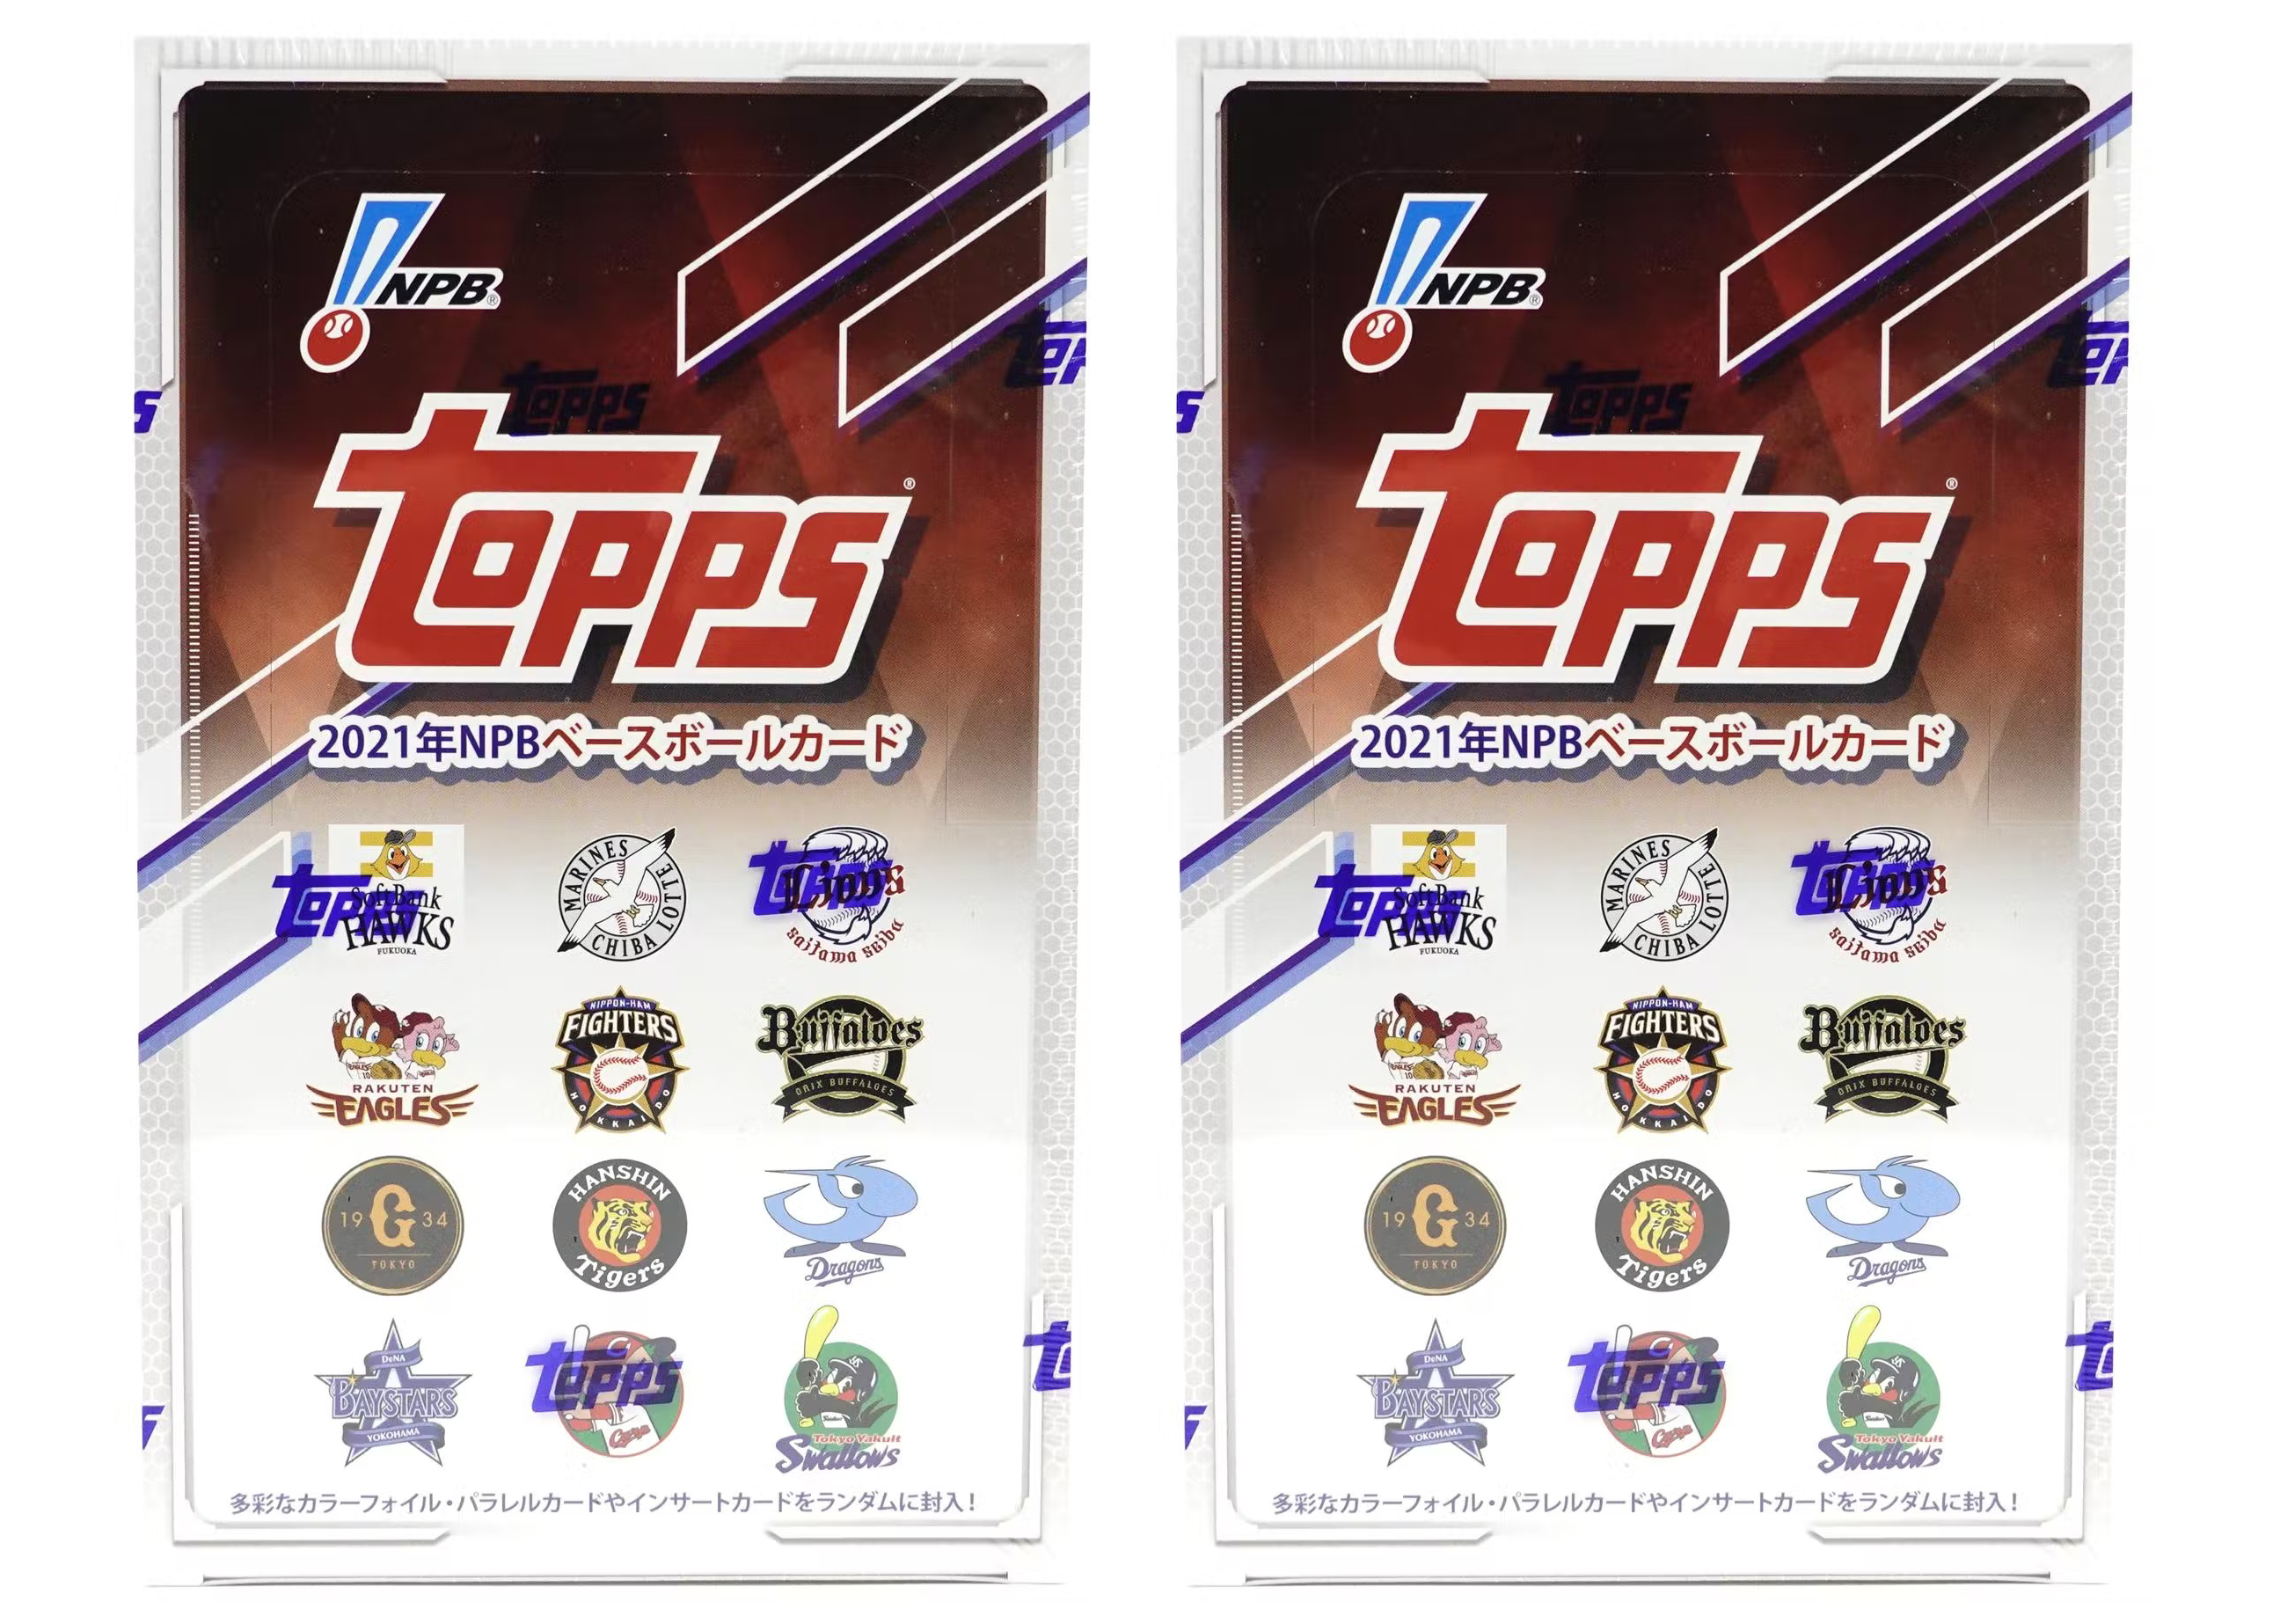 2021 Topps NPB (Nippon Professional Baseball) Baseball Hobby Box